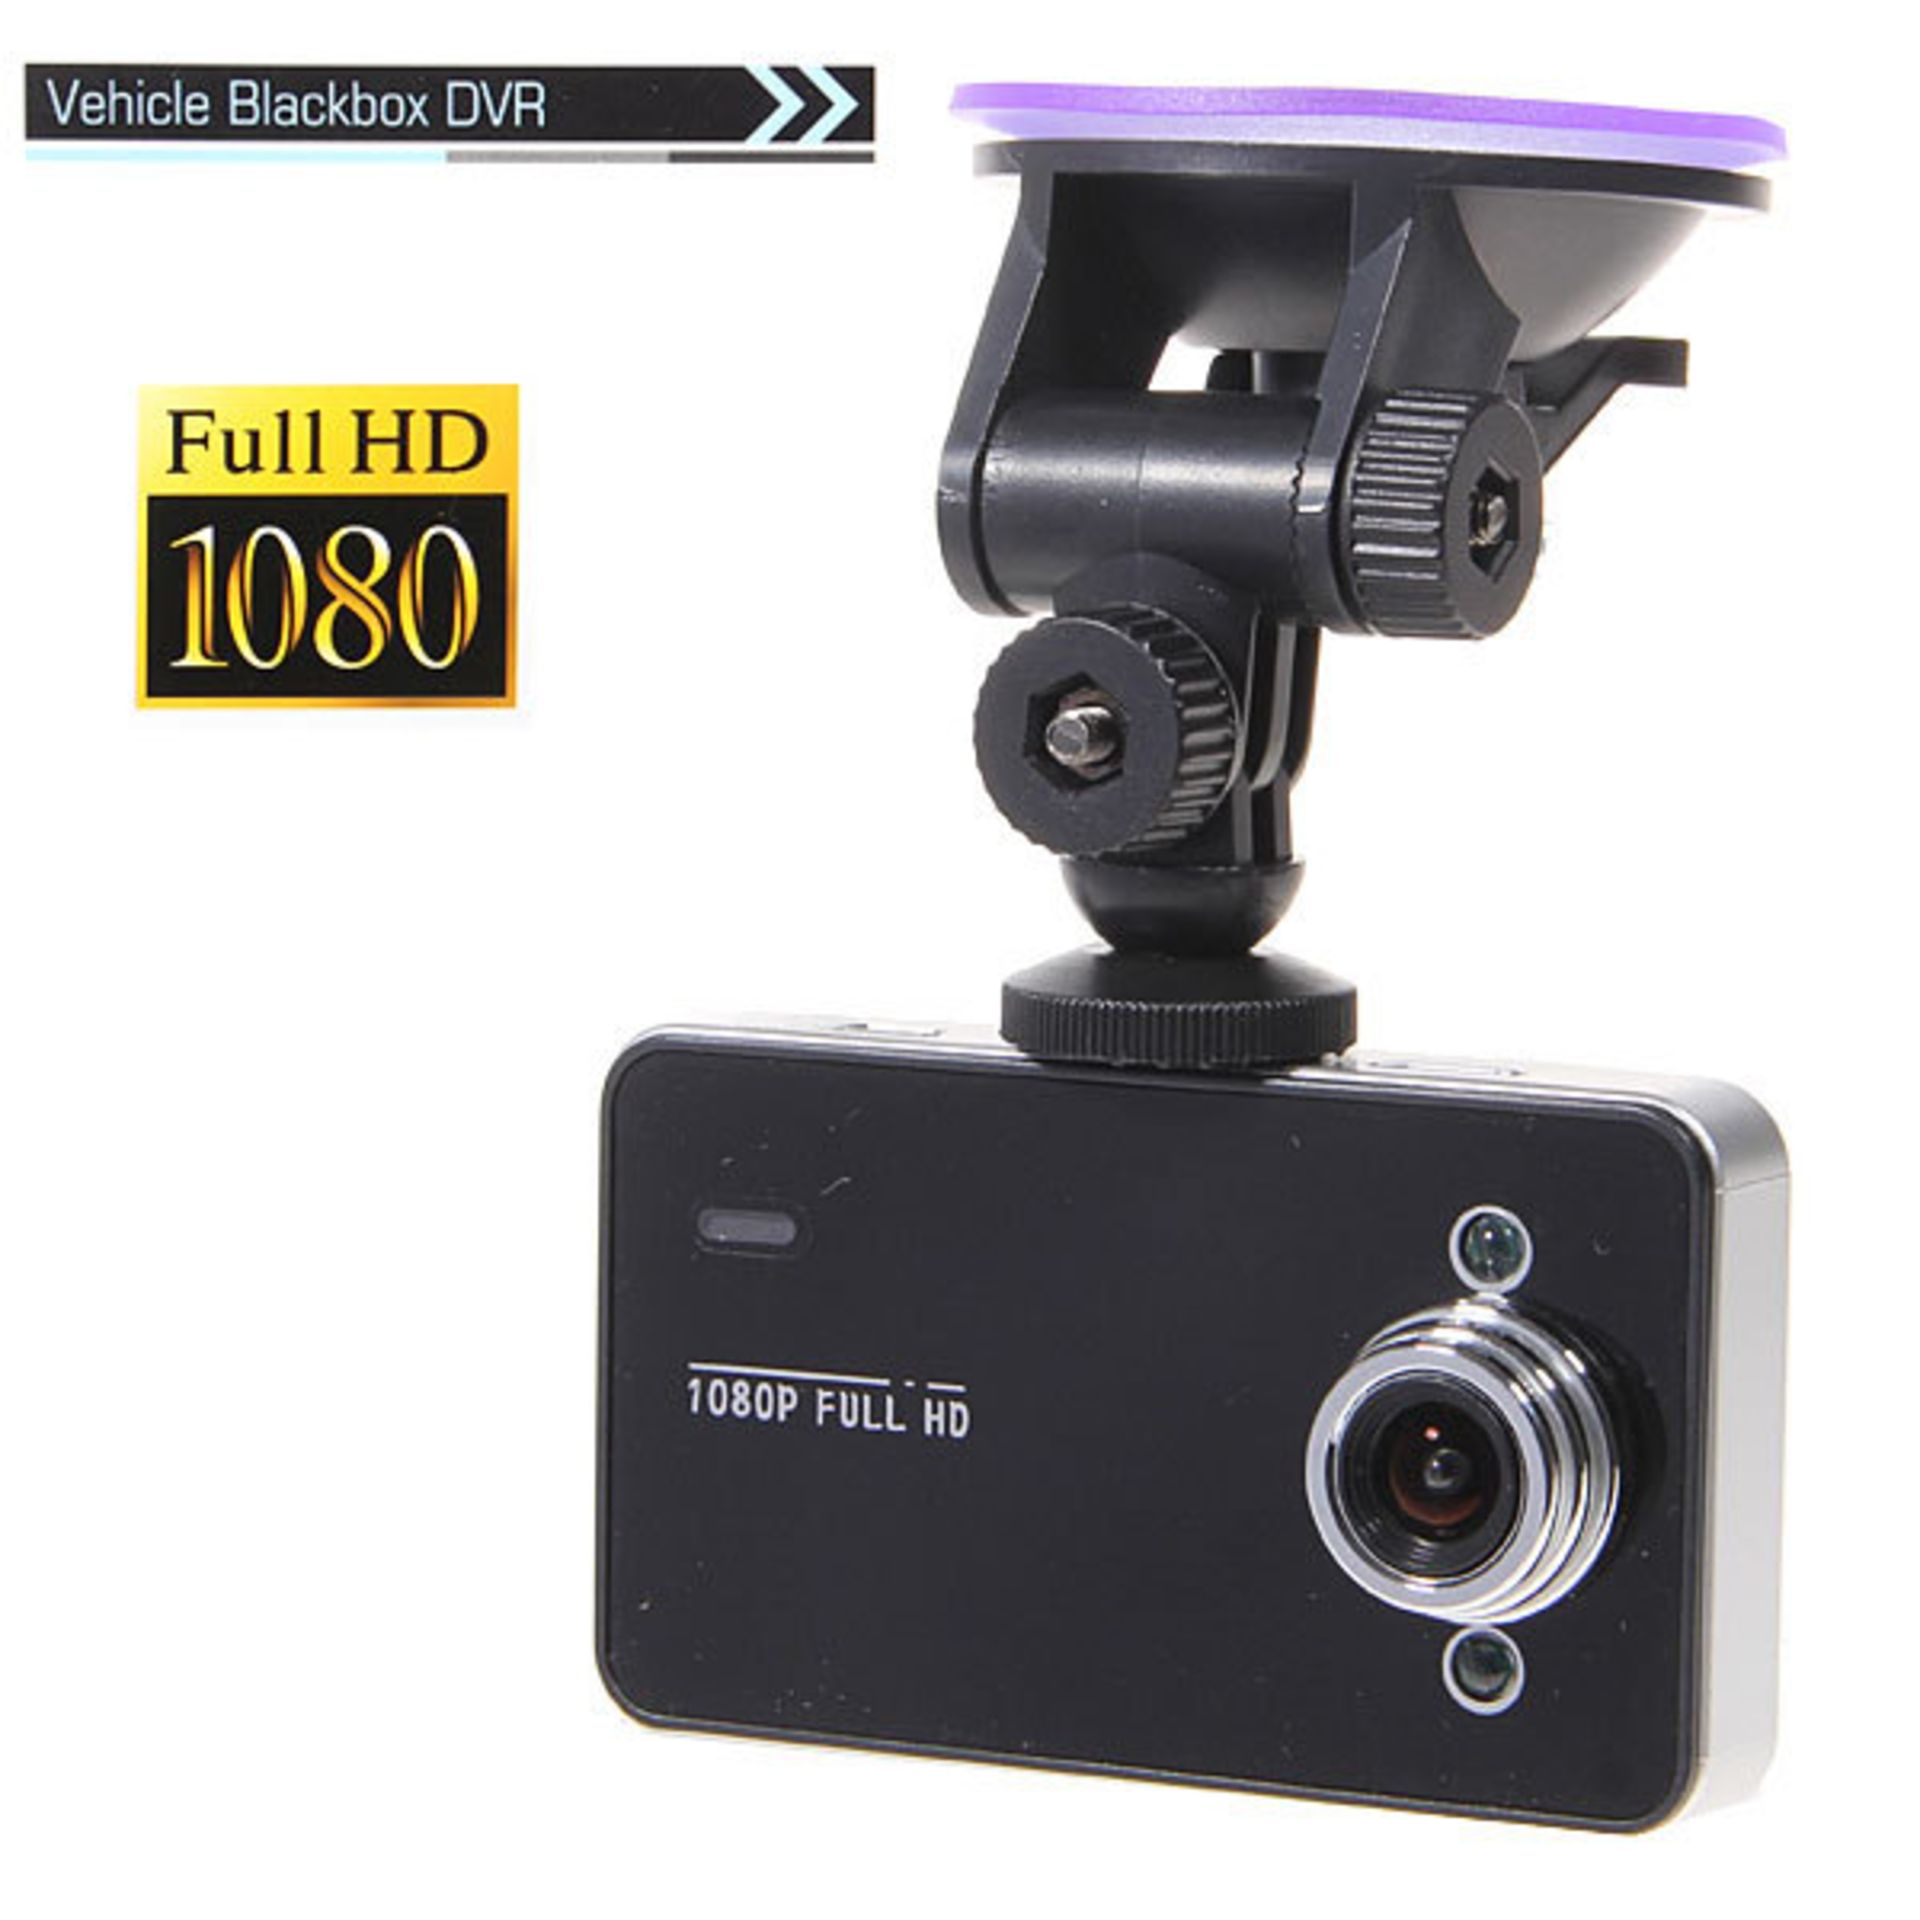 V *TRADE QTY* Brand New Car Camera Blackbox DVR With Motion Detecting HD/DVR 1080p X 4 YOUR BID